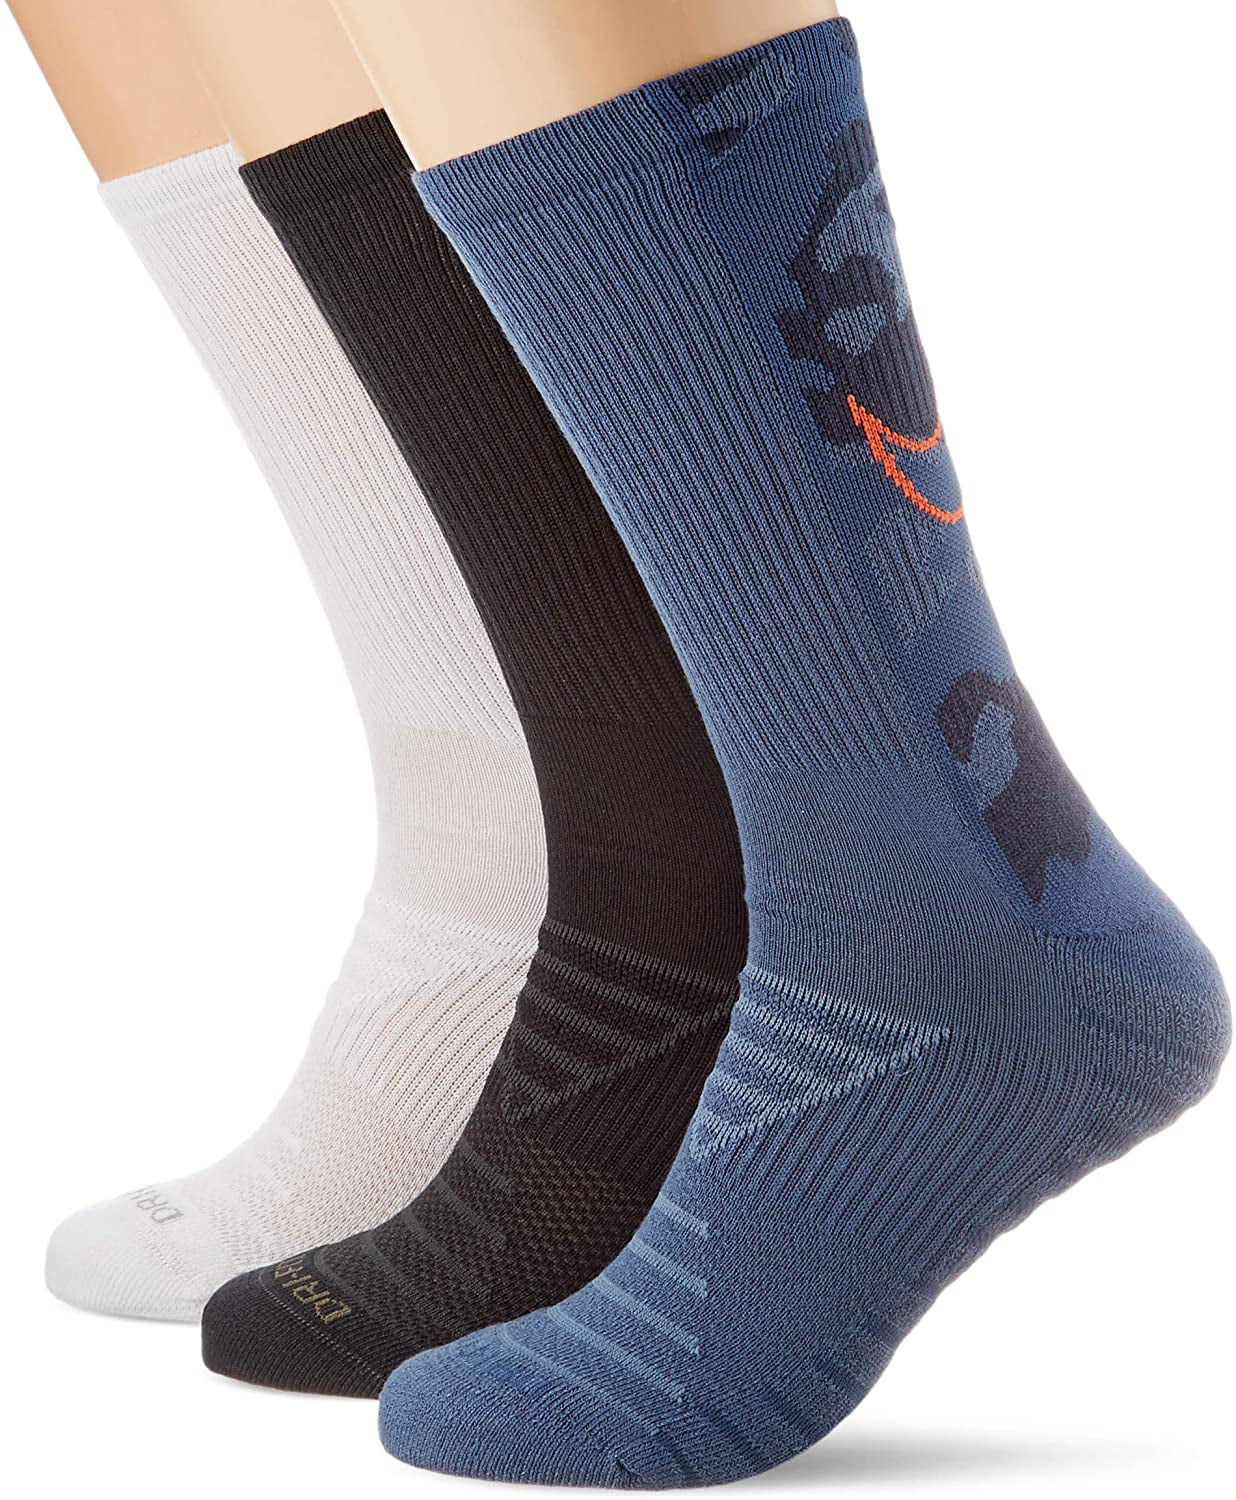 Nike Everyday Max Cushioned Crew Socks 3 pack Camo - Walmart.com ...